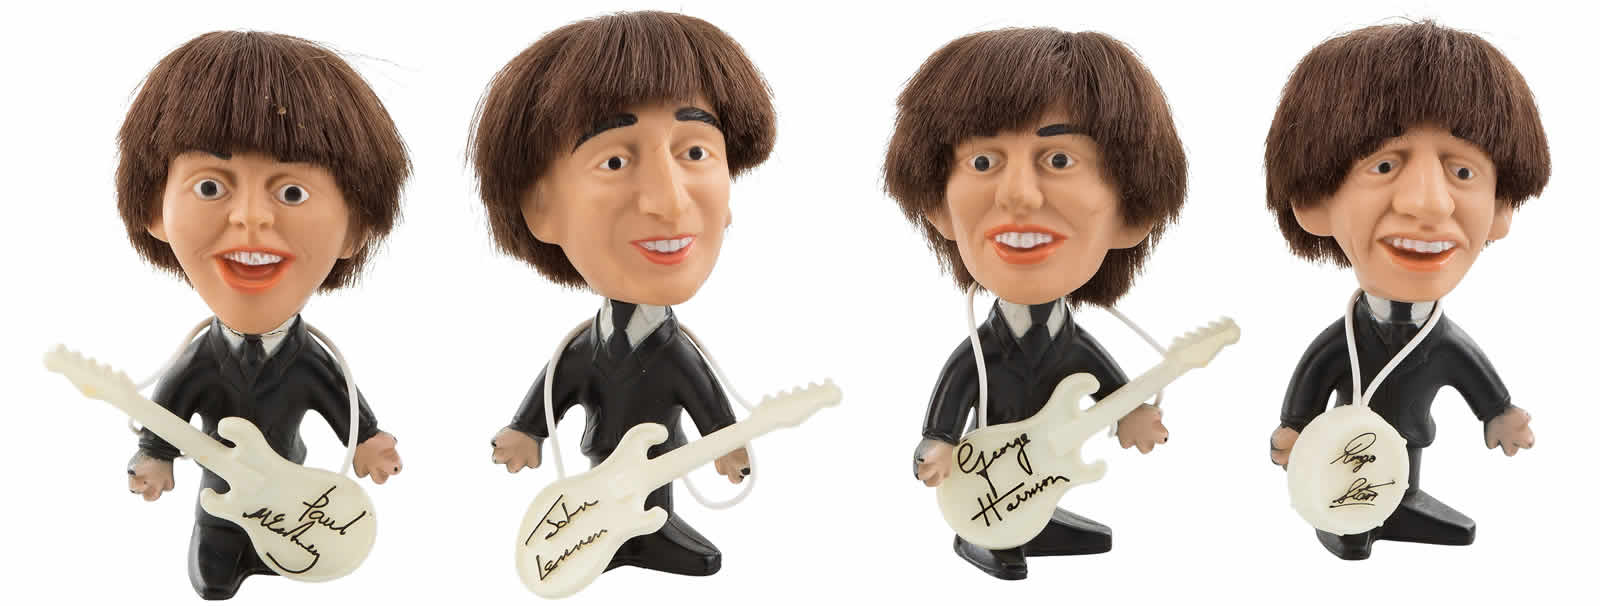 Beatles figurines